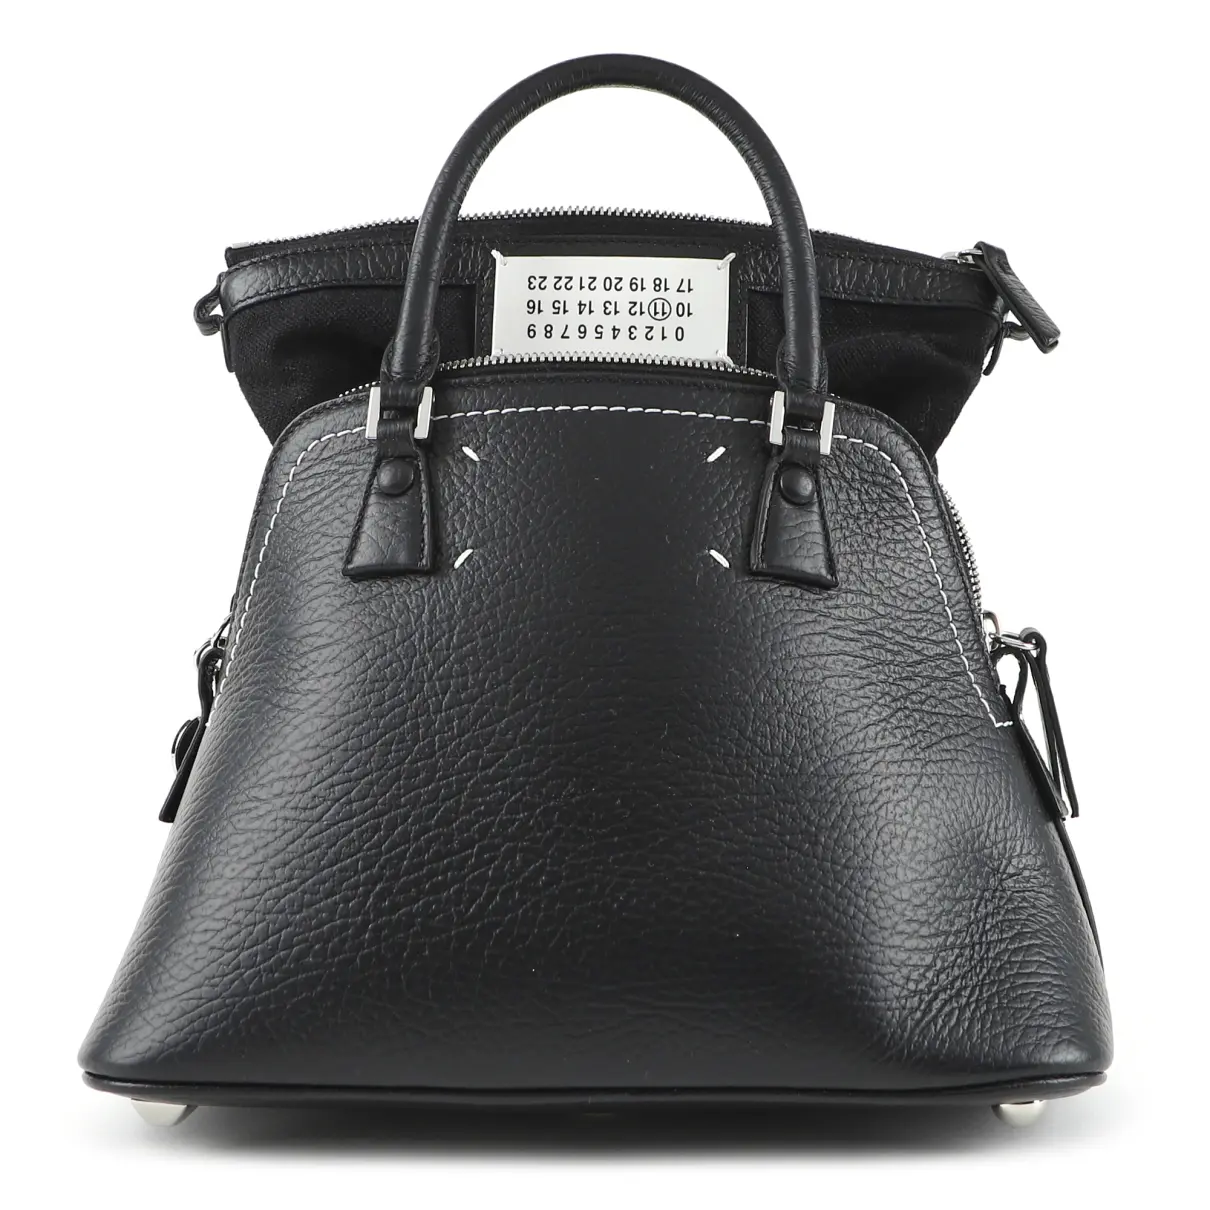 5AC leather handbag